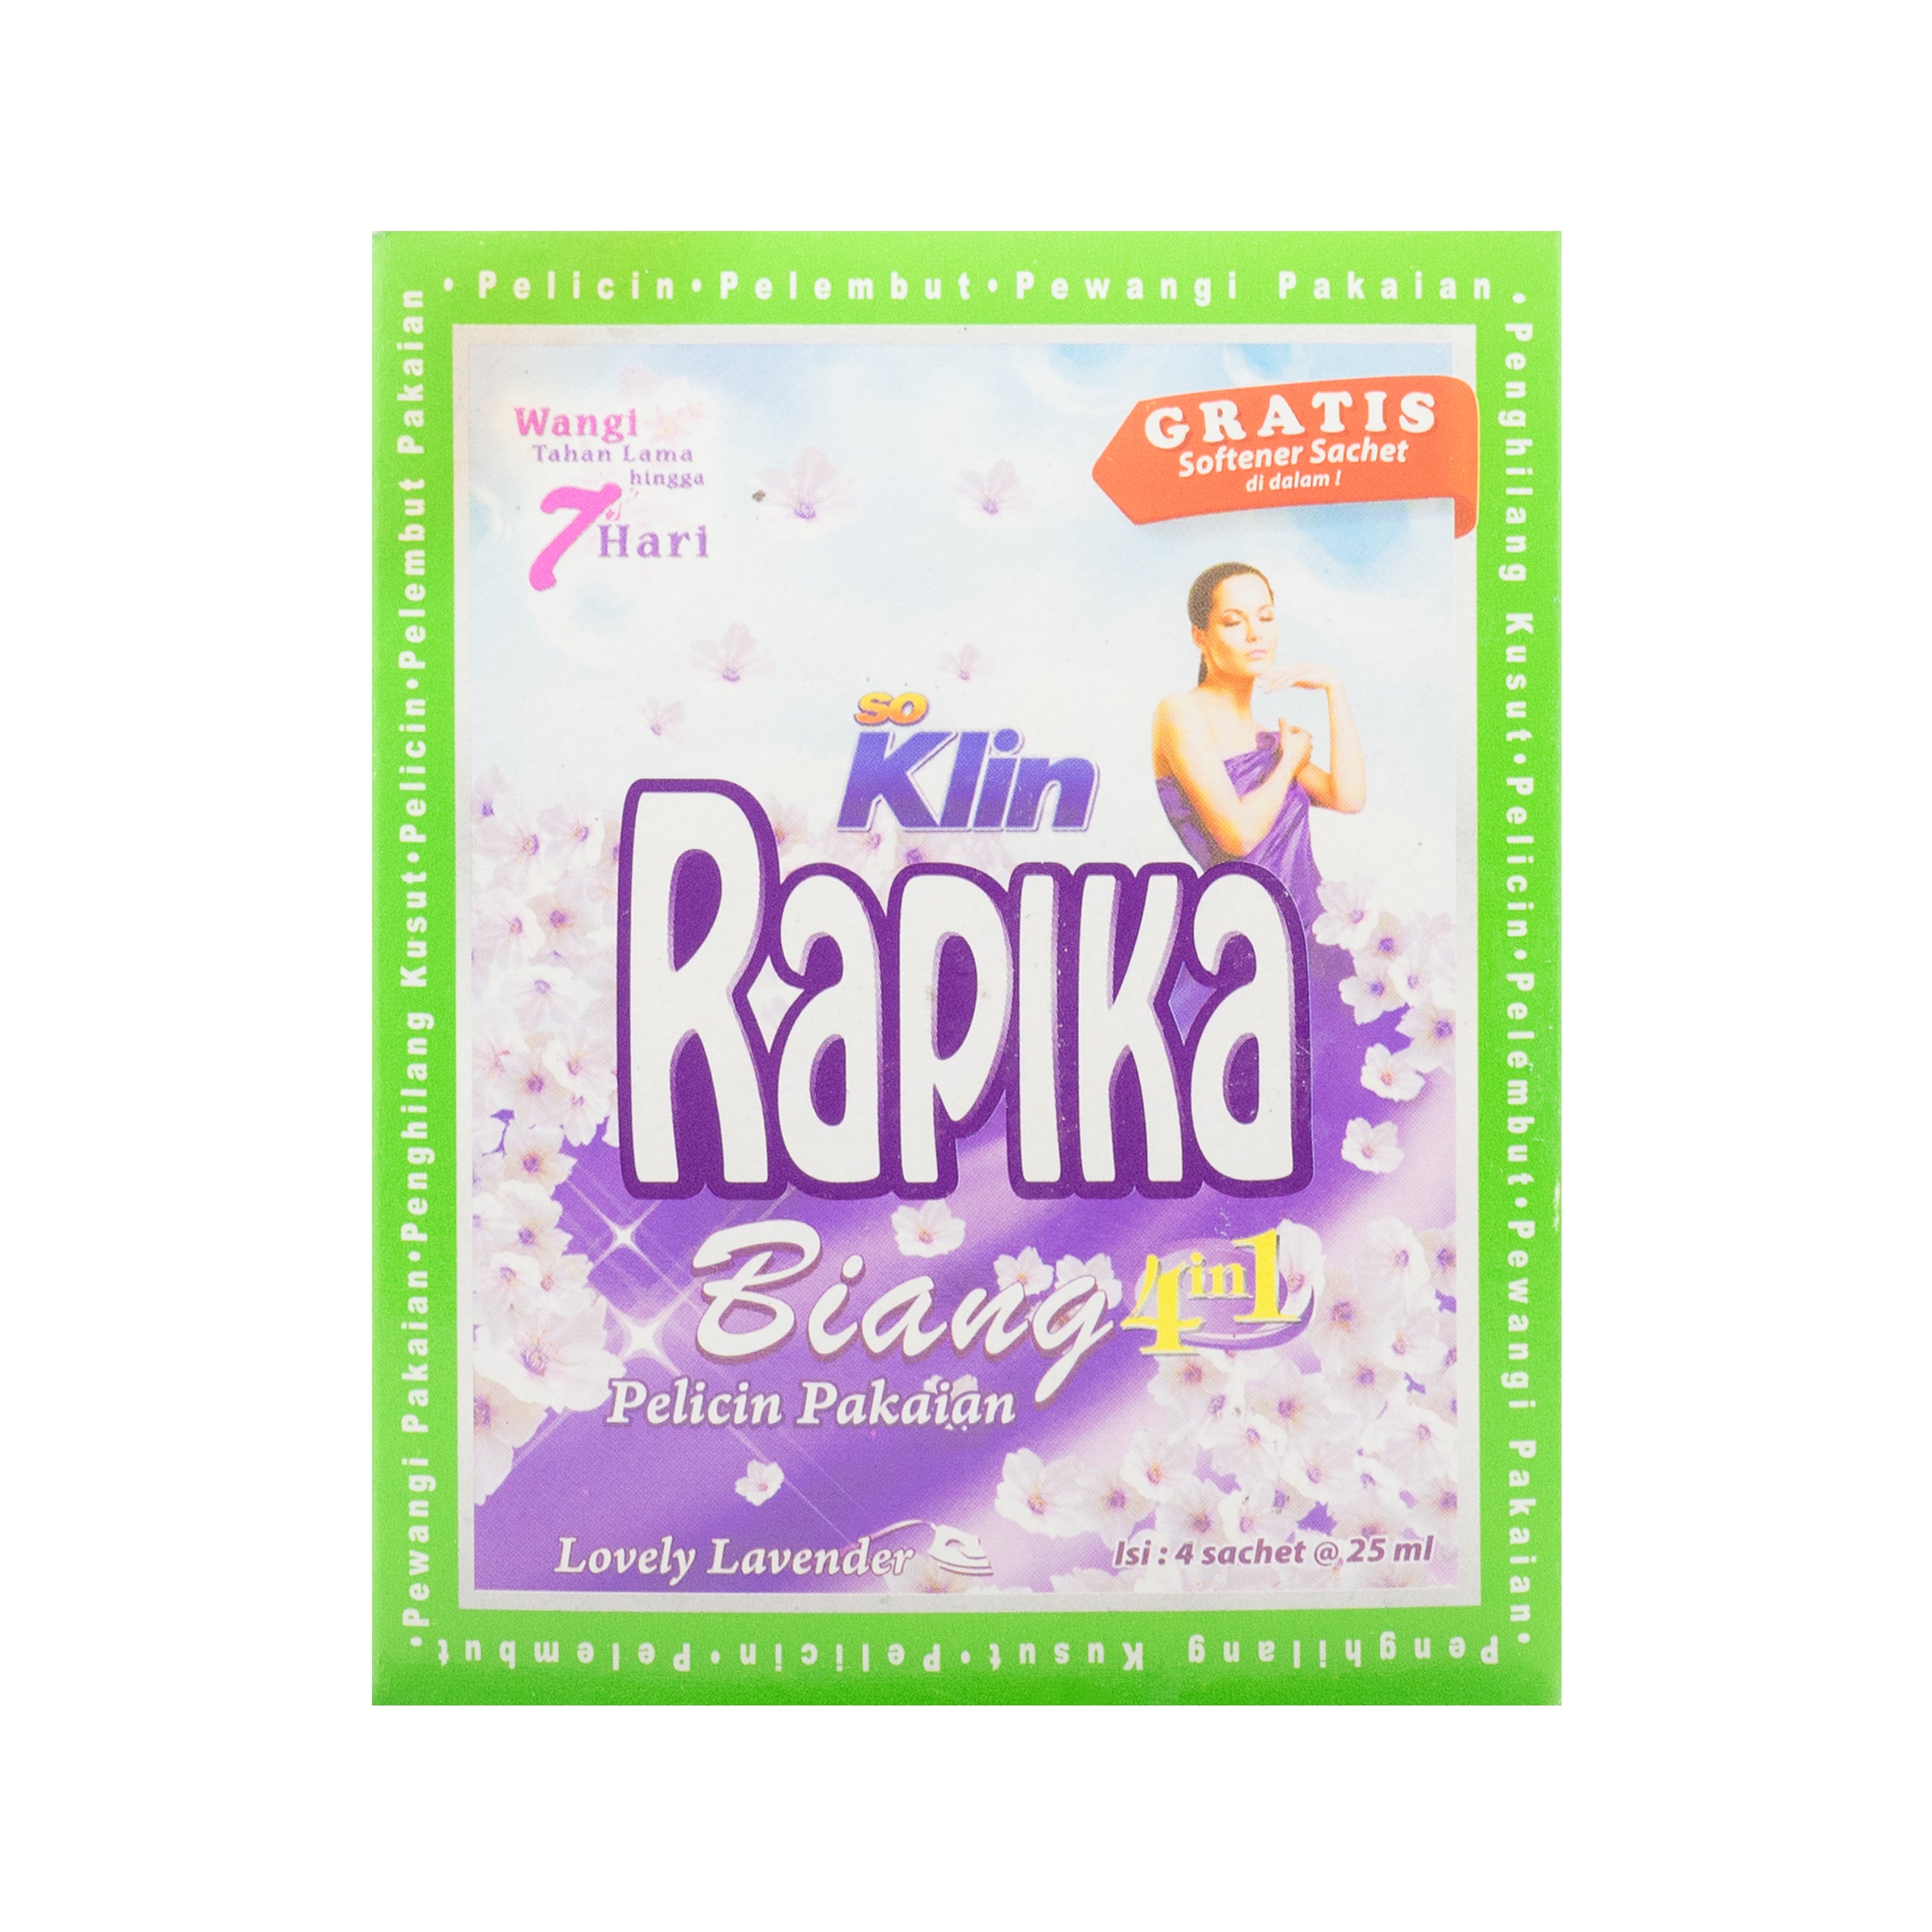 Rapika, Biang 5 in 1, Lovely Lavender, 25 ml X 4 sachets